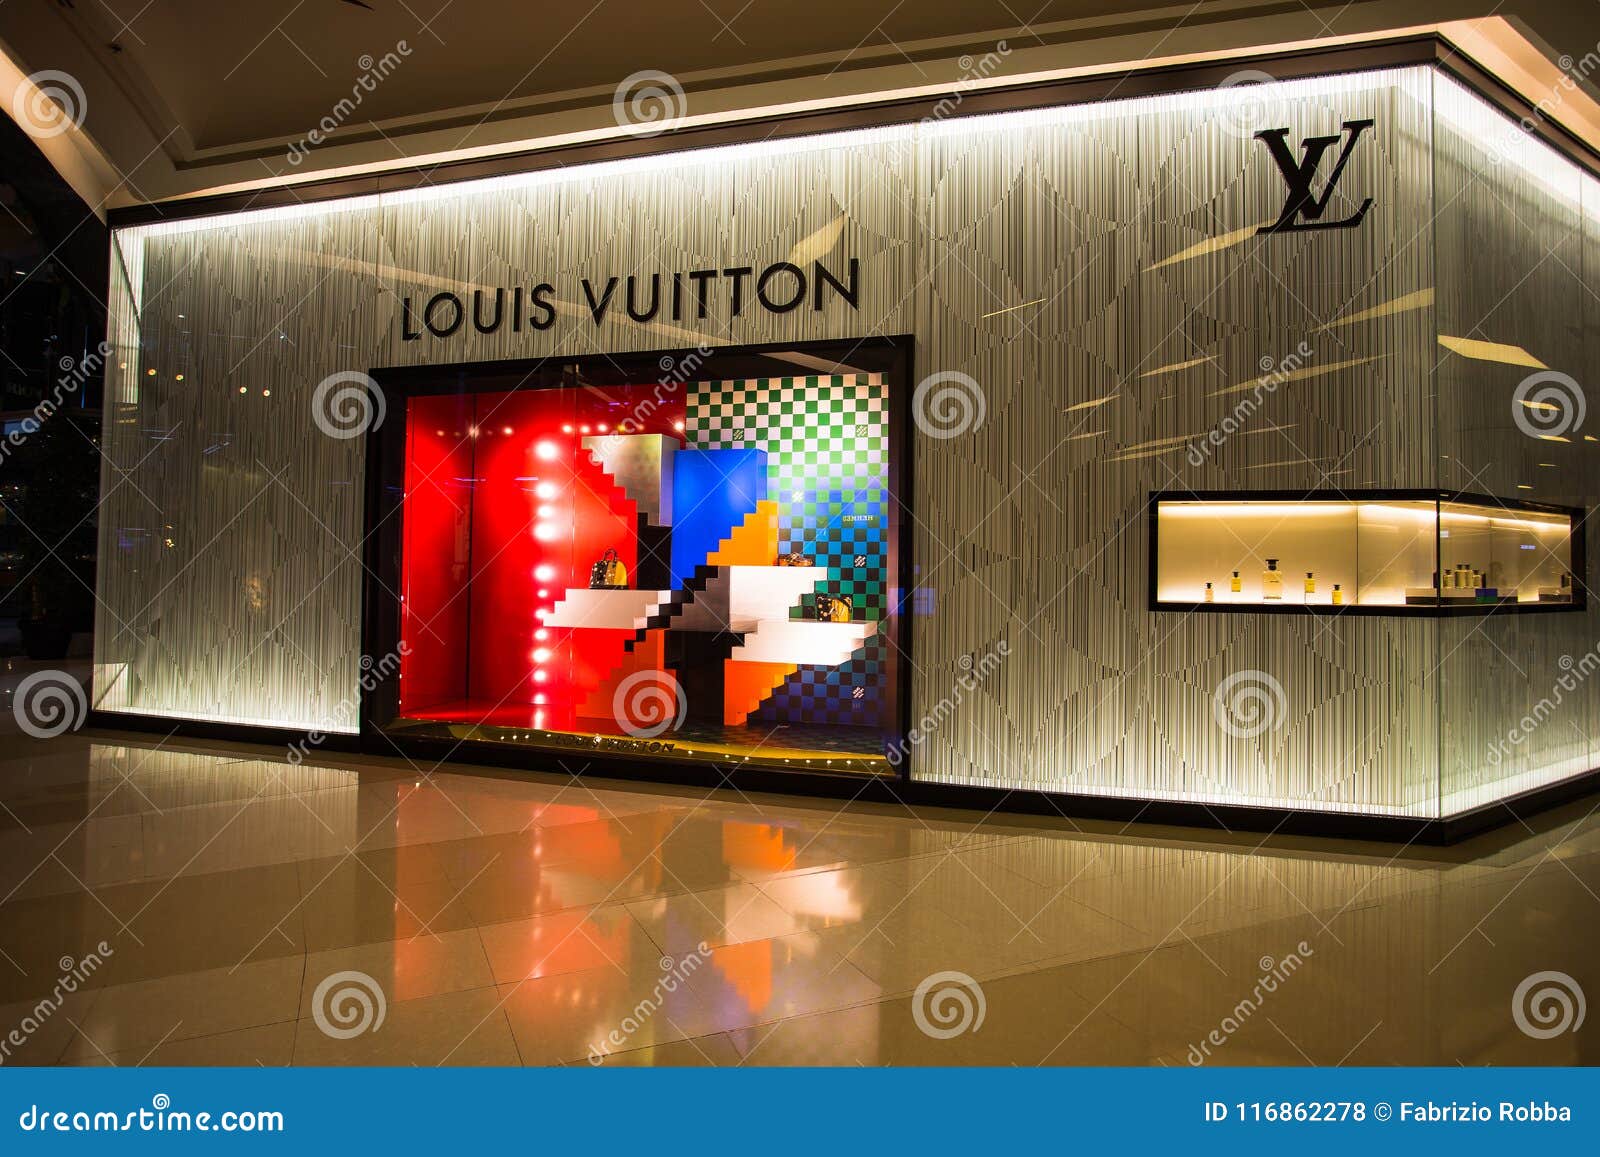 Louis Vuitton Store in Siam Paragon Mall in Bangkok, Thailand